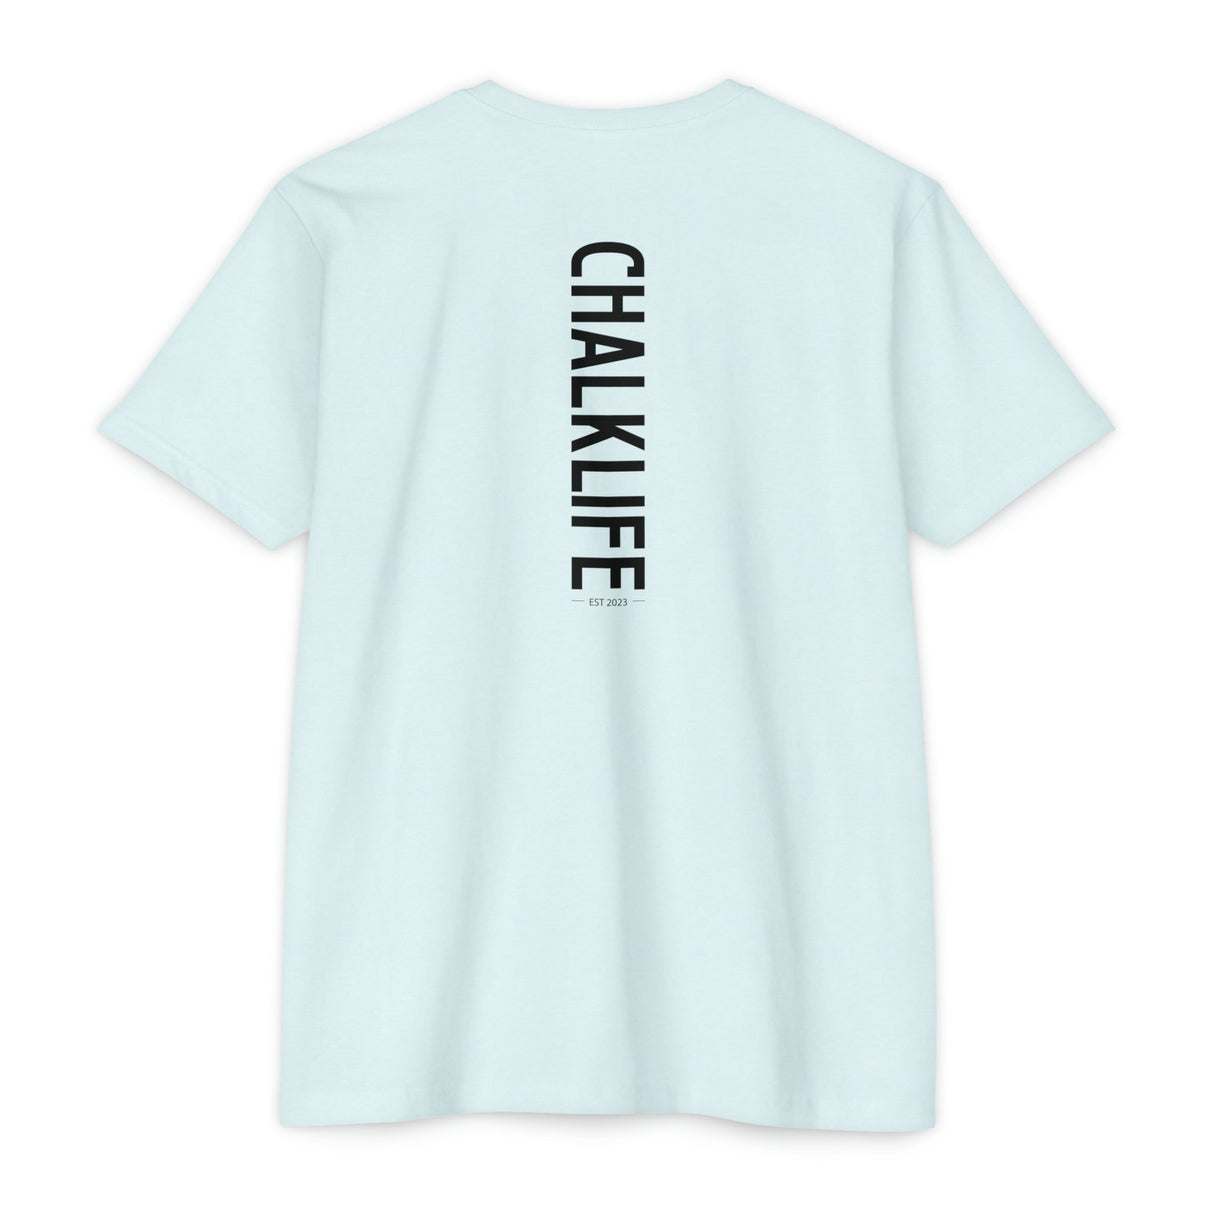 Pommel Horse "The Struggle is Real" T-Shirt - Chalklife, LLC